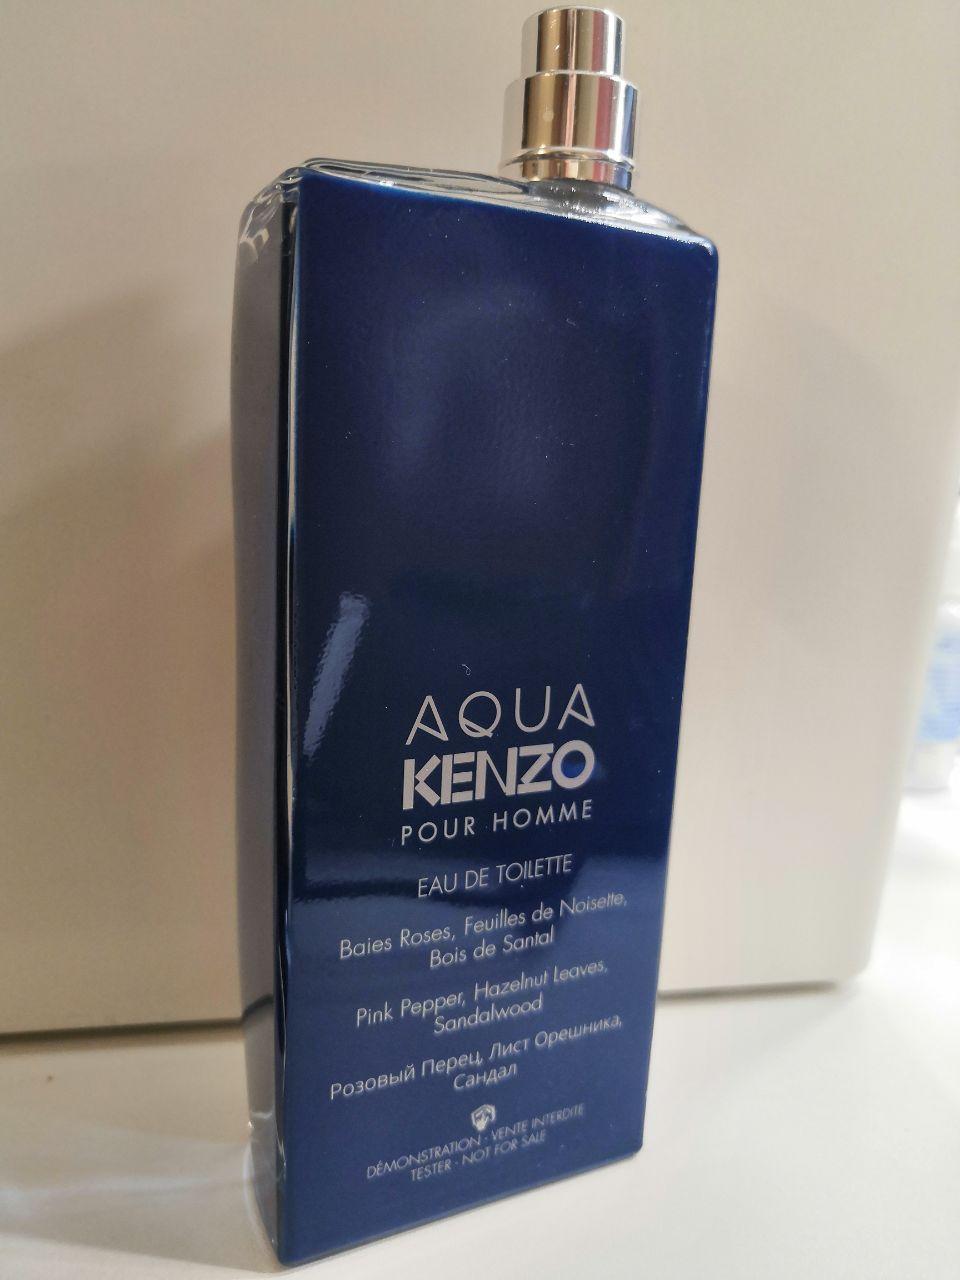 Kenzo aqua homme. Kenzo Aqua pour homme 100ml. Kenzo Aqua Kenzo pour homme. Aqua Kenzo pour homme EDT 100 ml. Kenzo Aqua Kenzo pour homme 100ml.